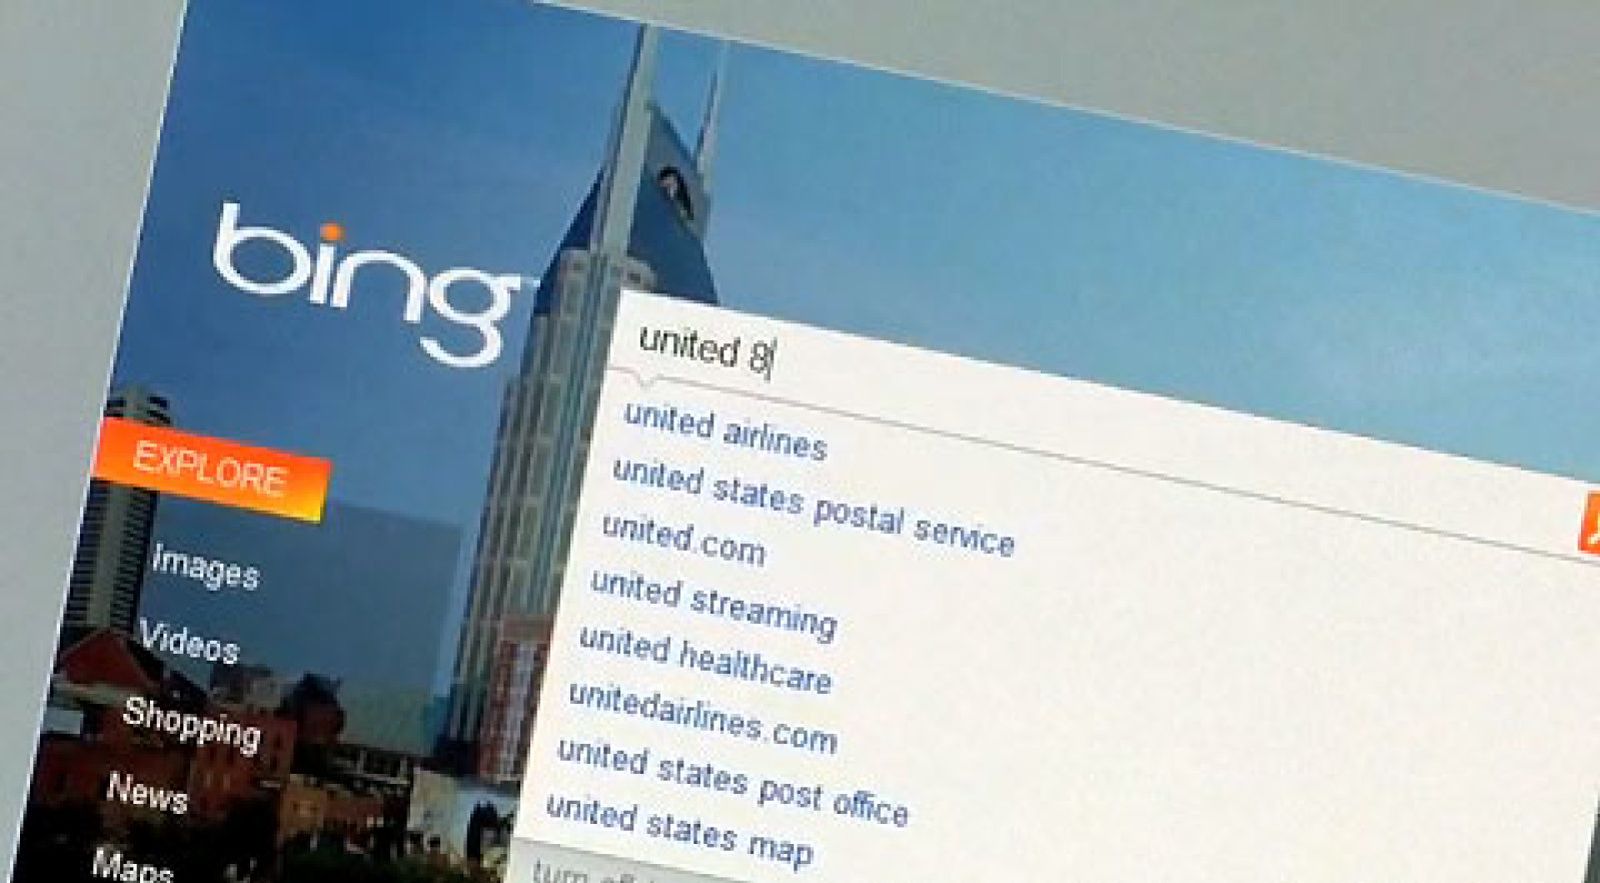 Foto: Bing, la verdadera amenaza de Google